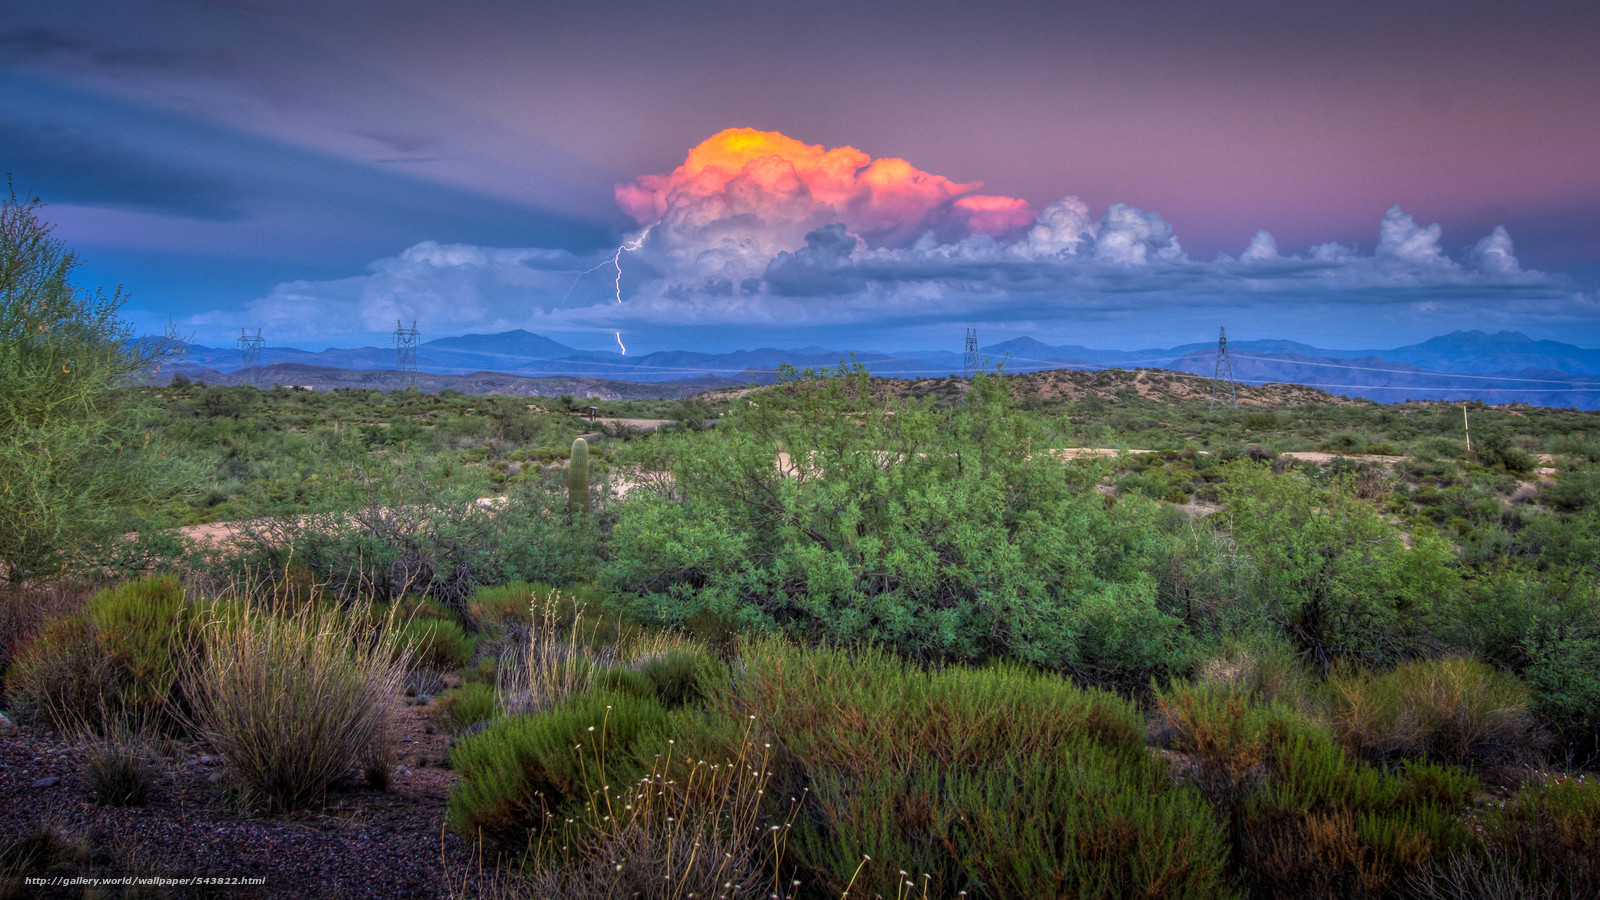 Download wallpaper strike thunderhead Scottsdale Arizona free